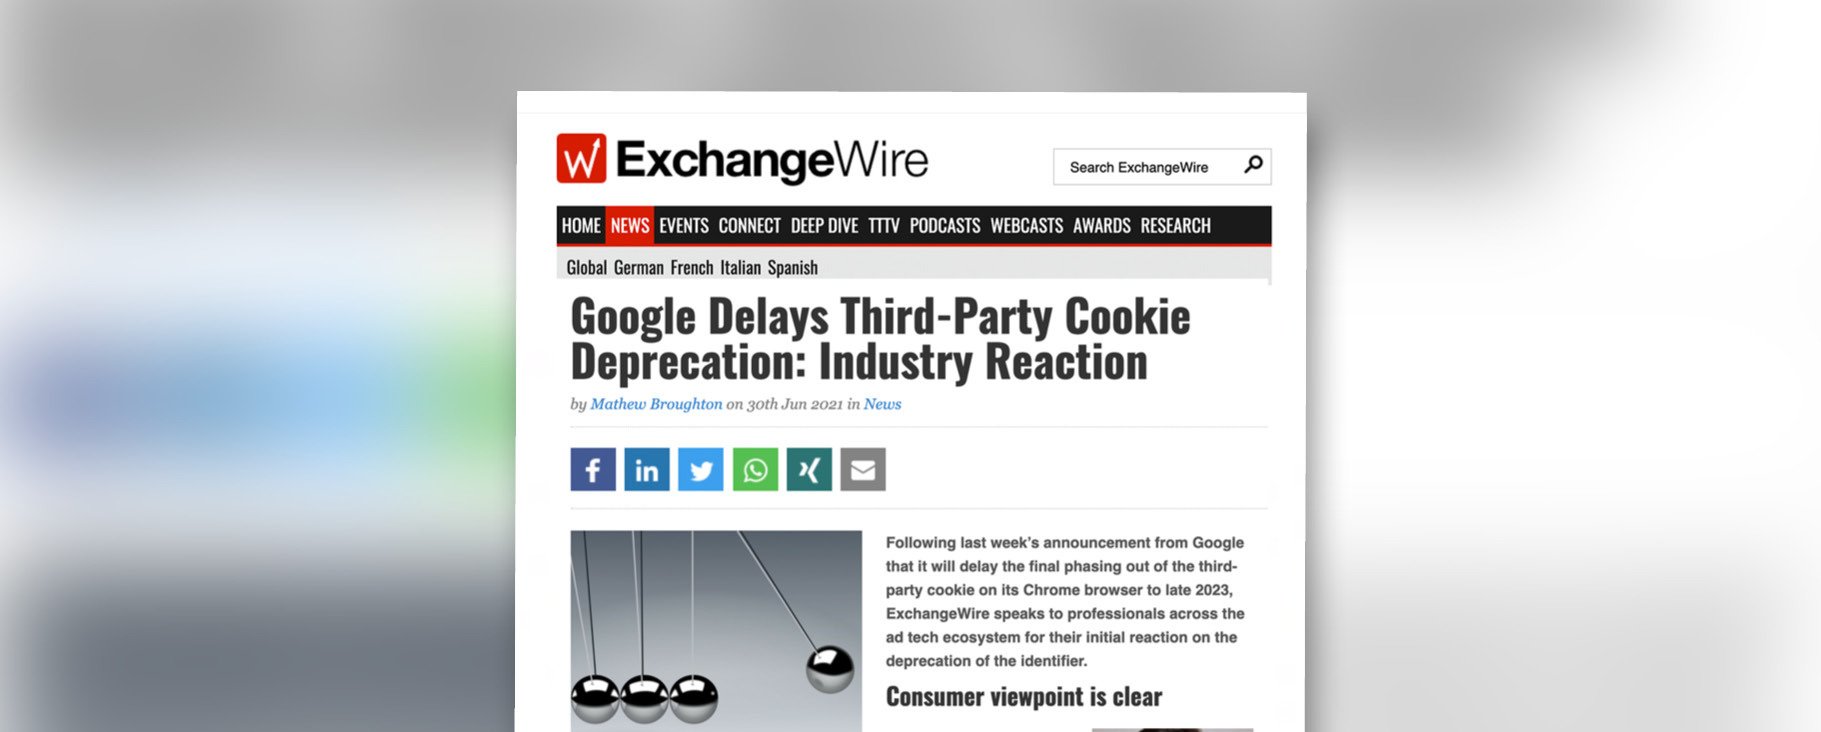 ExchangeWire: Google Delays Third-Party Cookie Deprecation—Industry Reaction